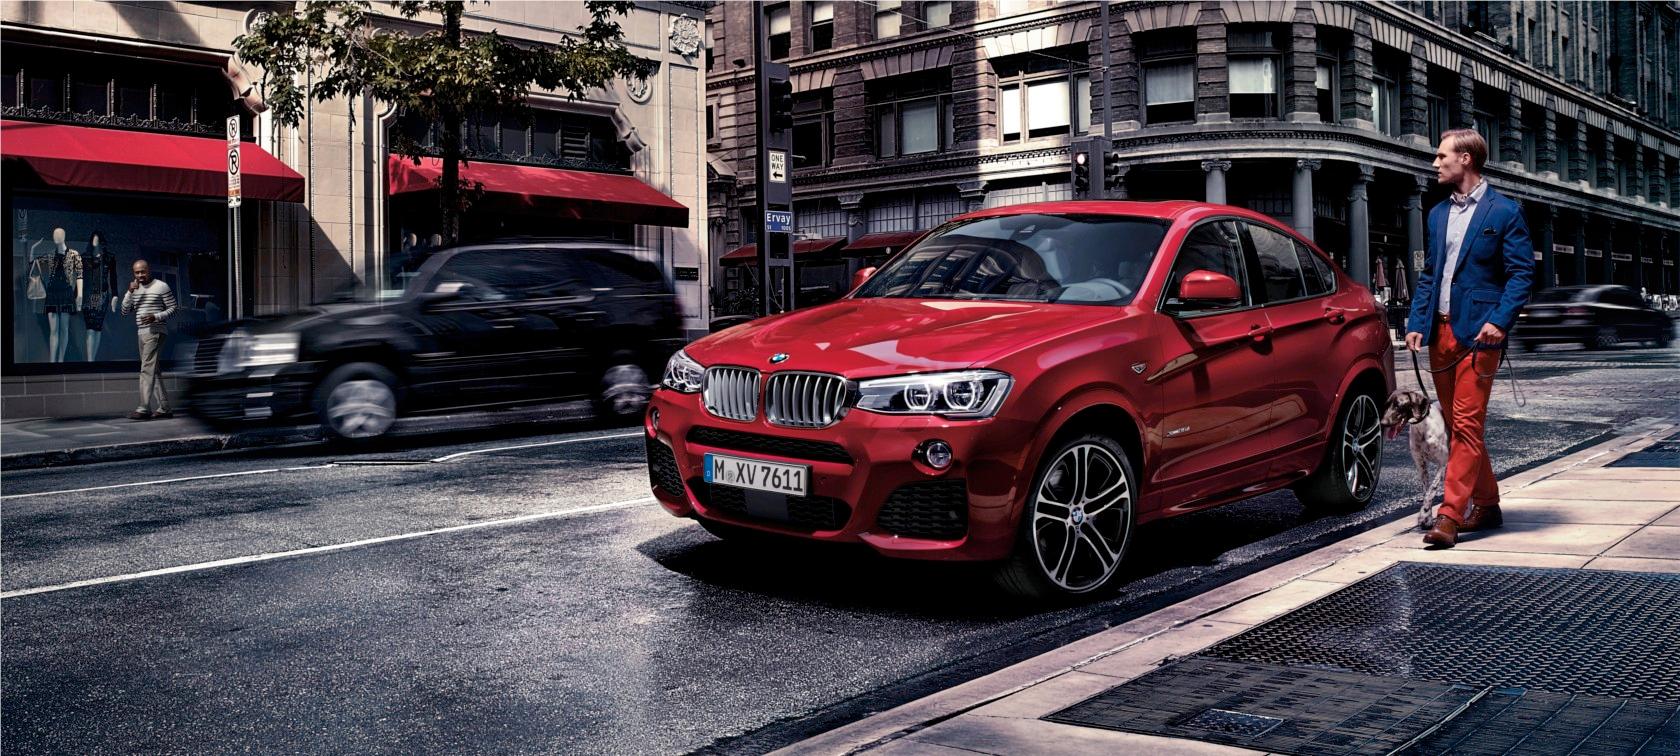 BMW X4 blir ”mellansyskon” i tillverkarens utbud av ”Sports activity vehicle”